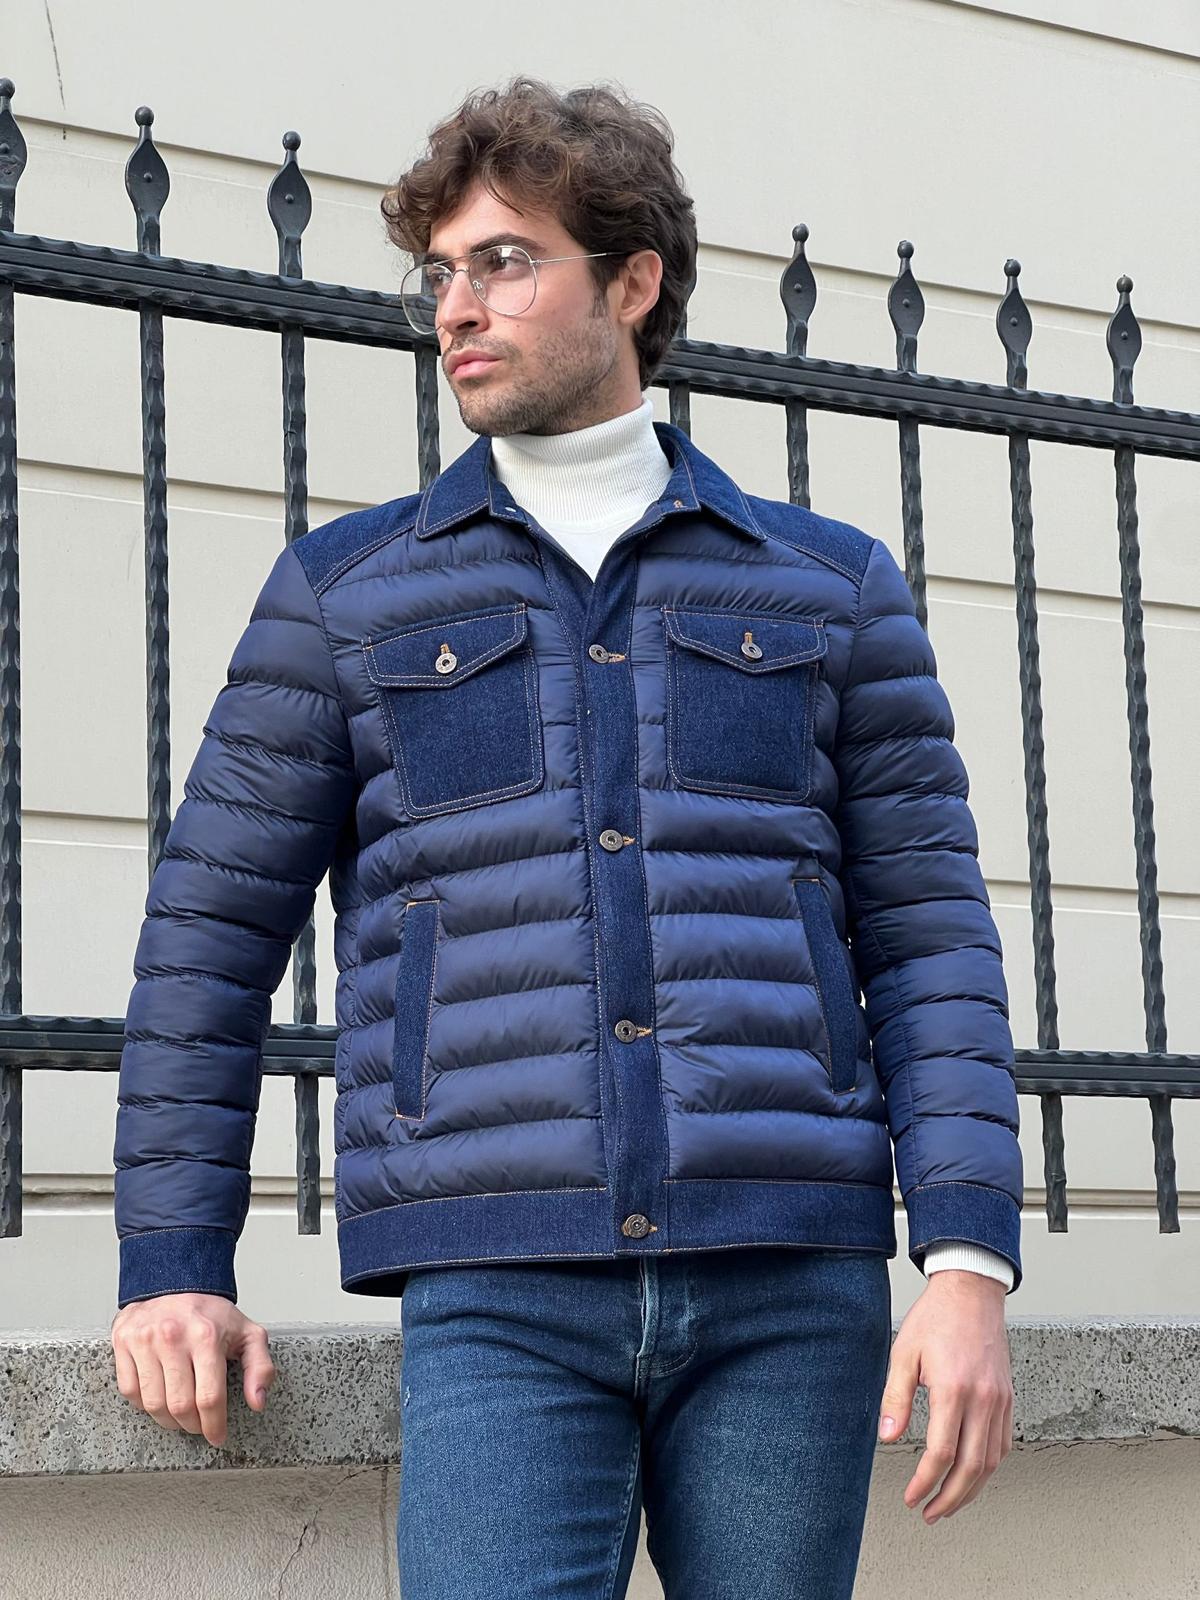 Confident male model in a stylish navy blue denim coat, exuding casual elegance.